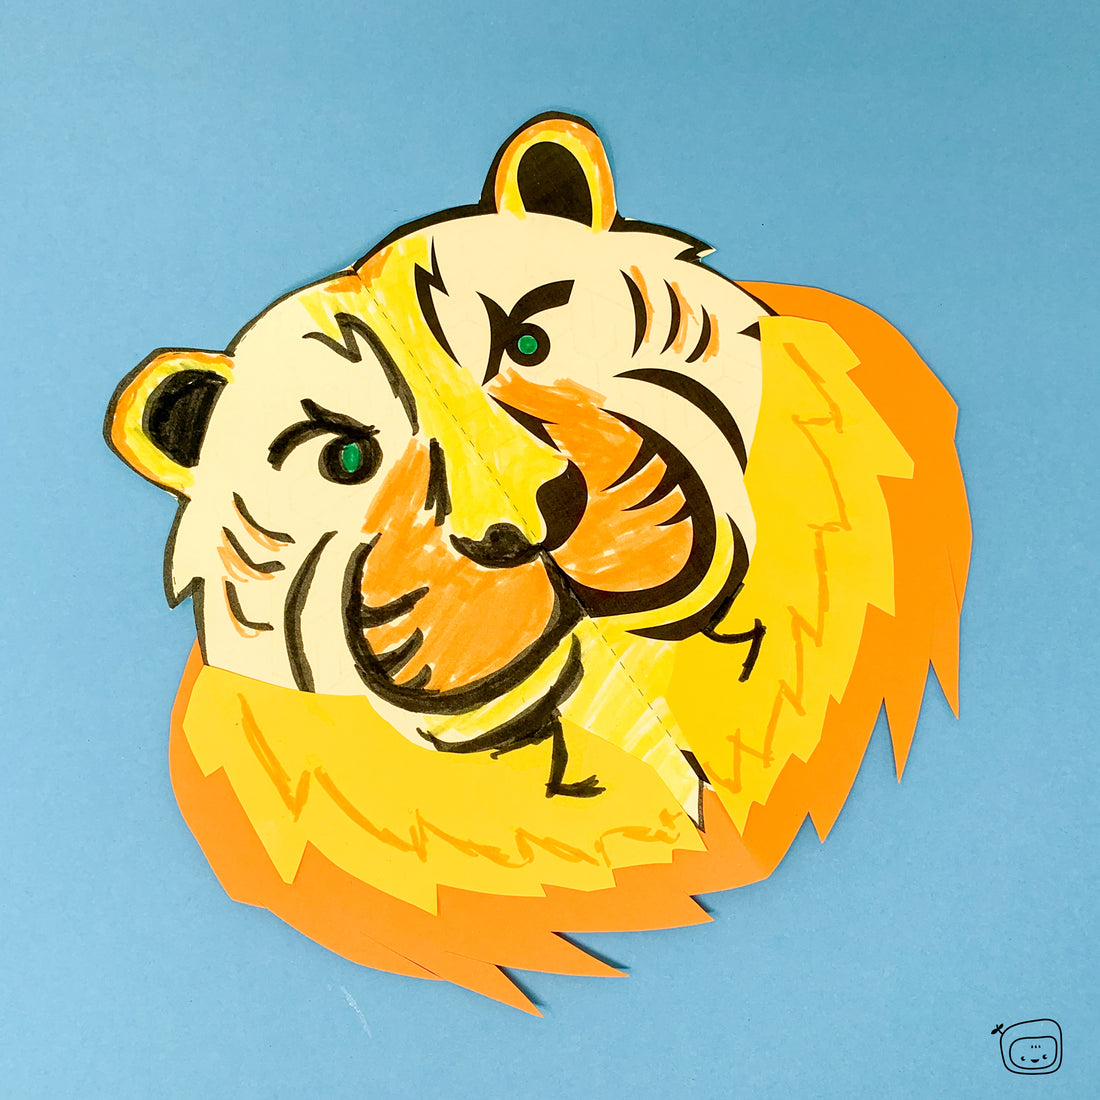 Tiger Mask - Mirroring drawing - coloring, cutting - layering